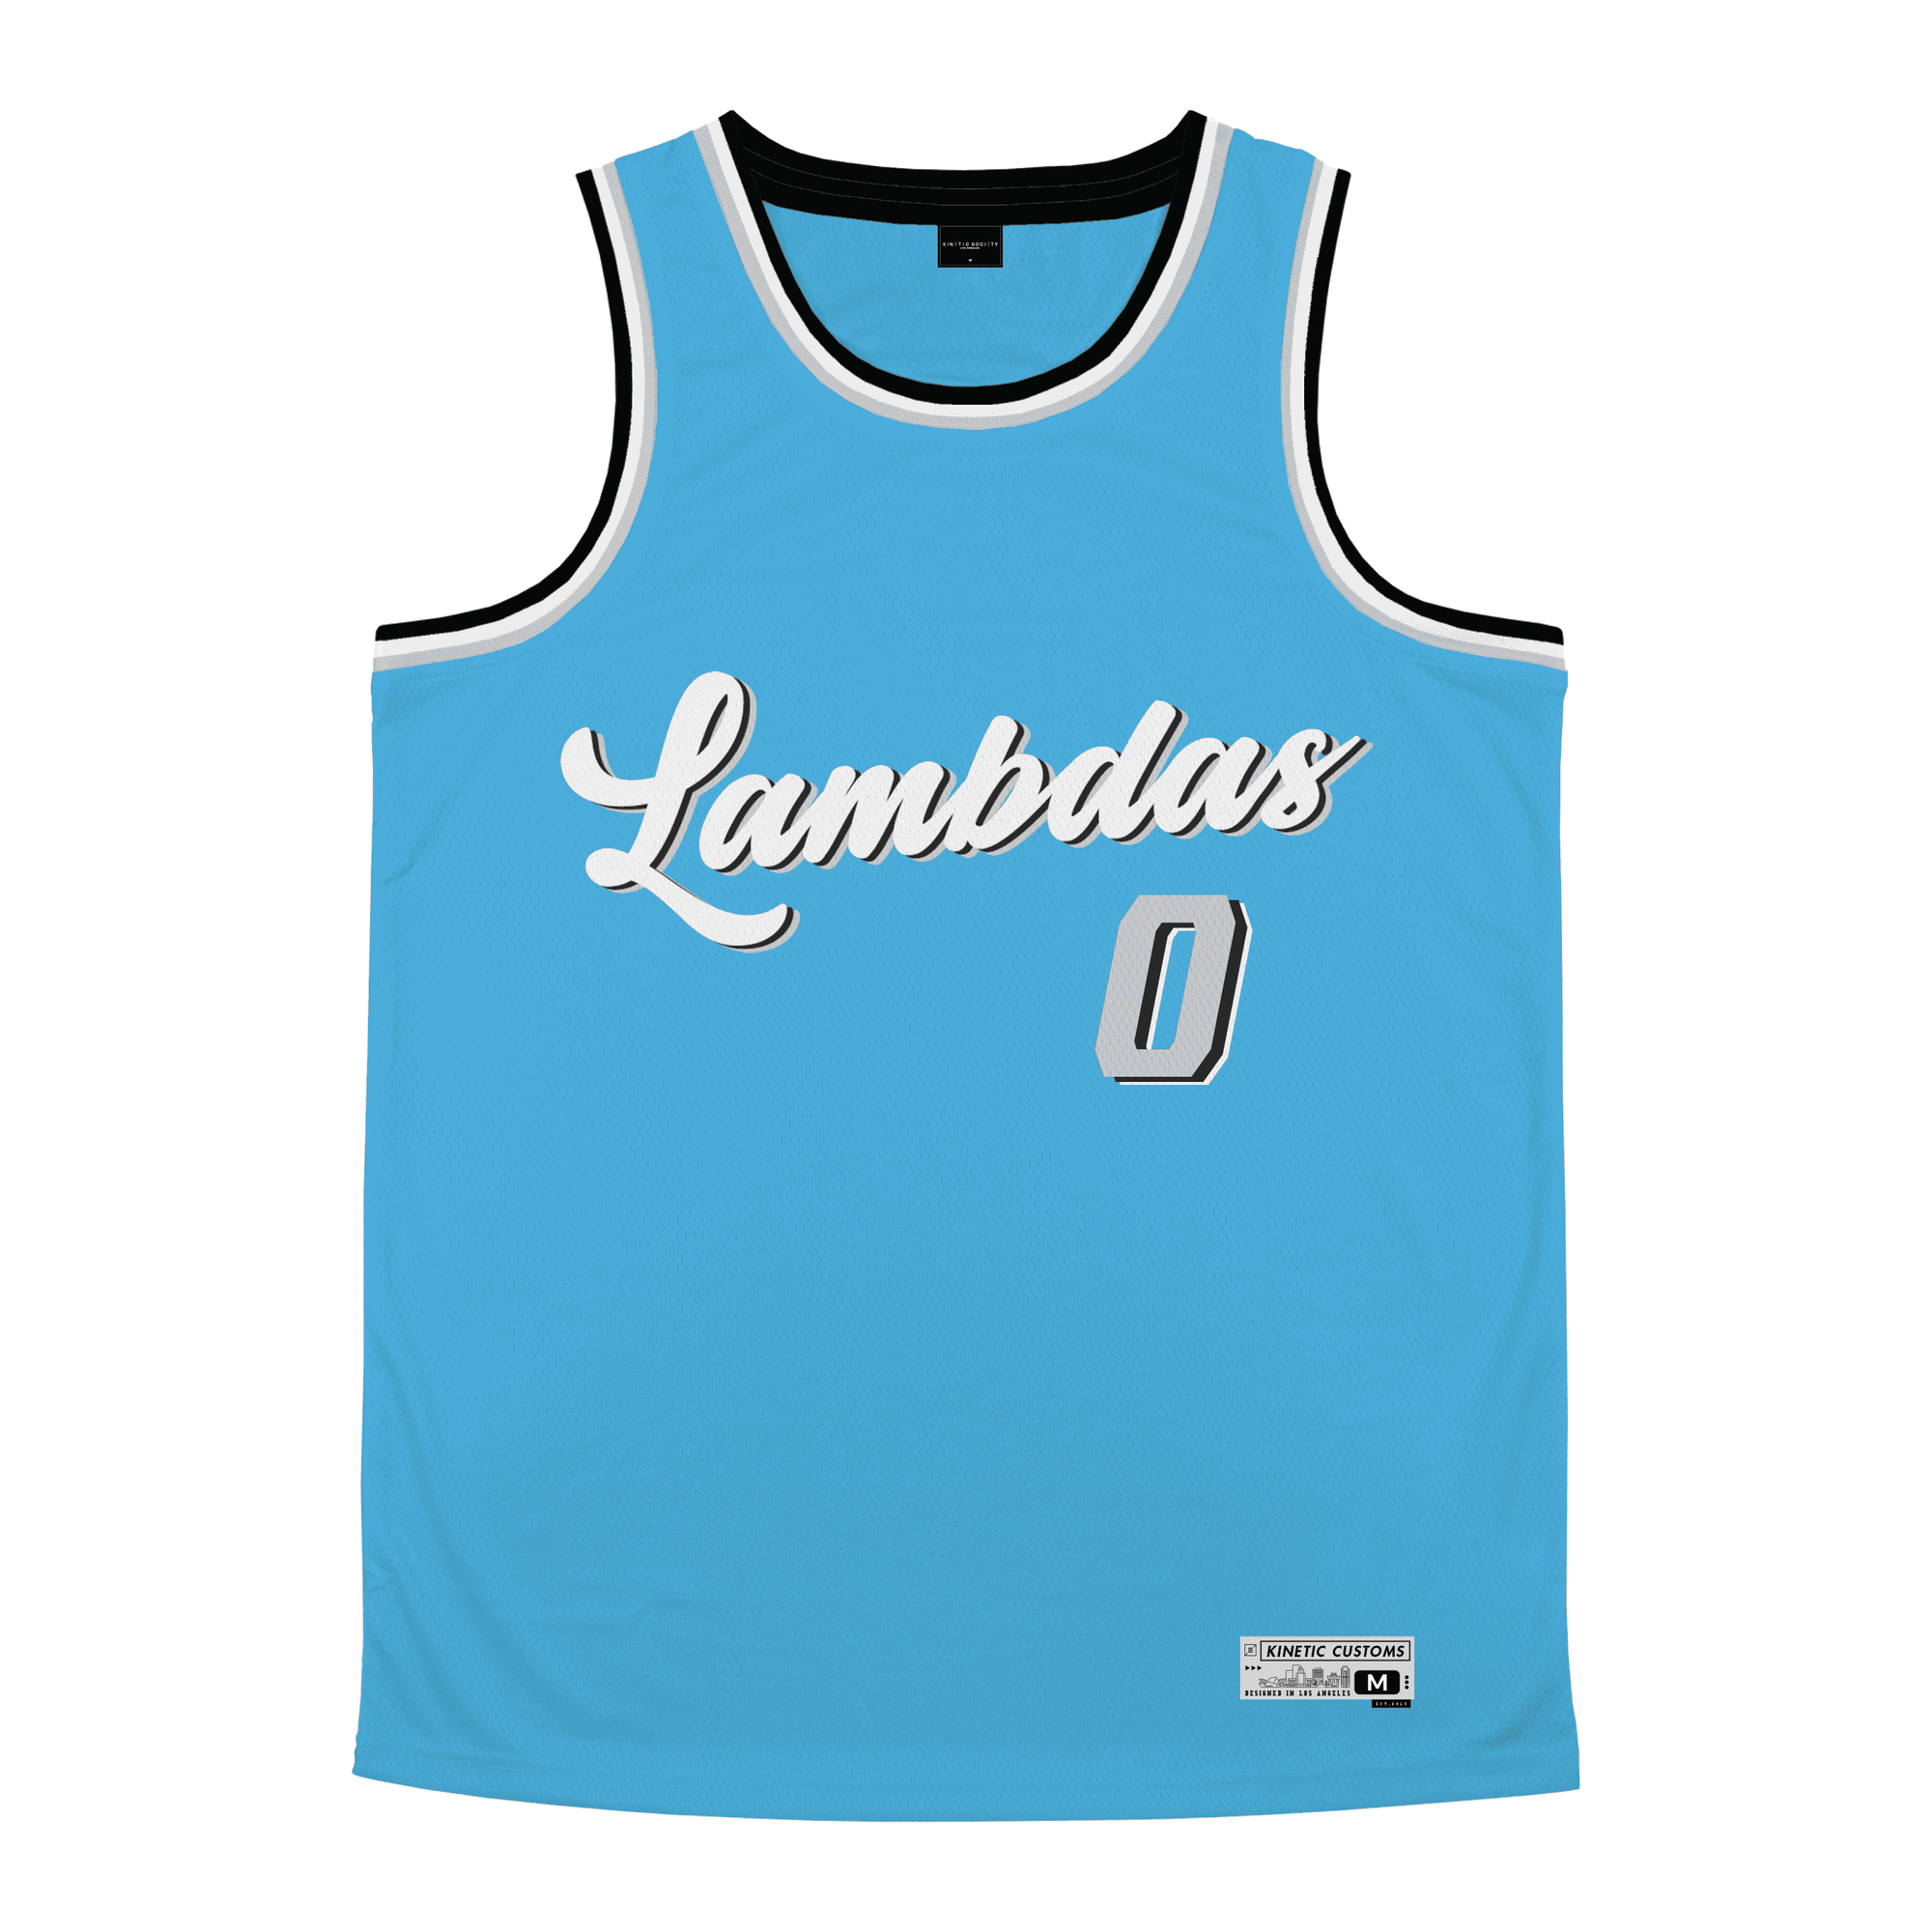 Lambda Phi Epsilon - Pacific Mist Basketball Jersey